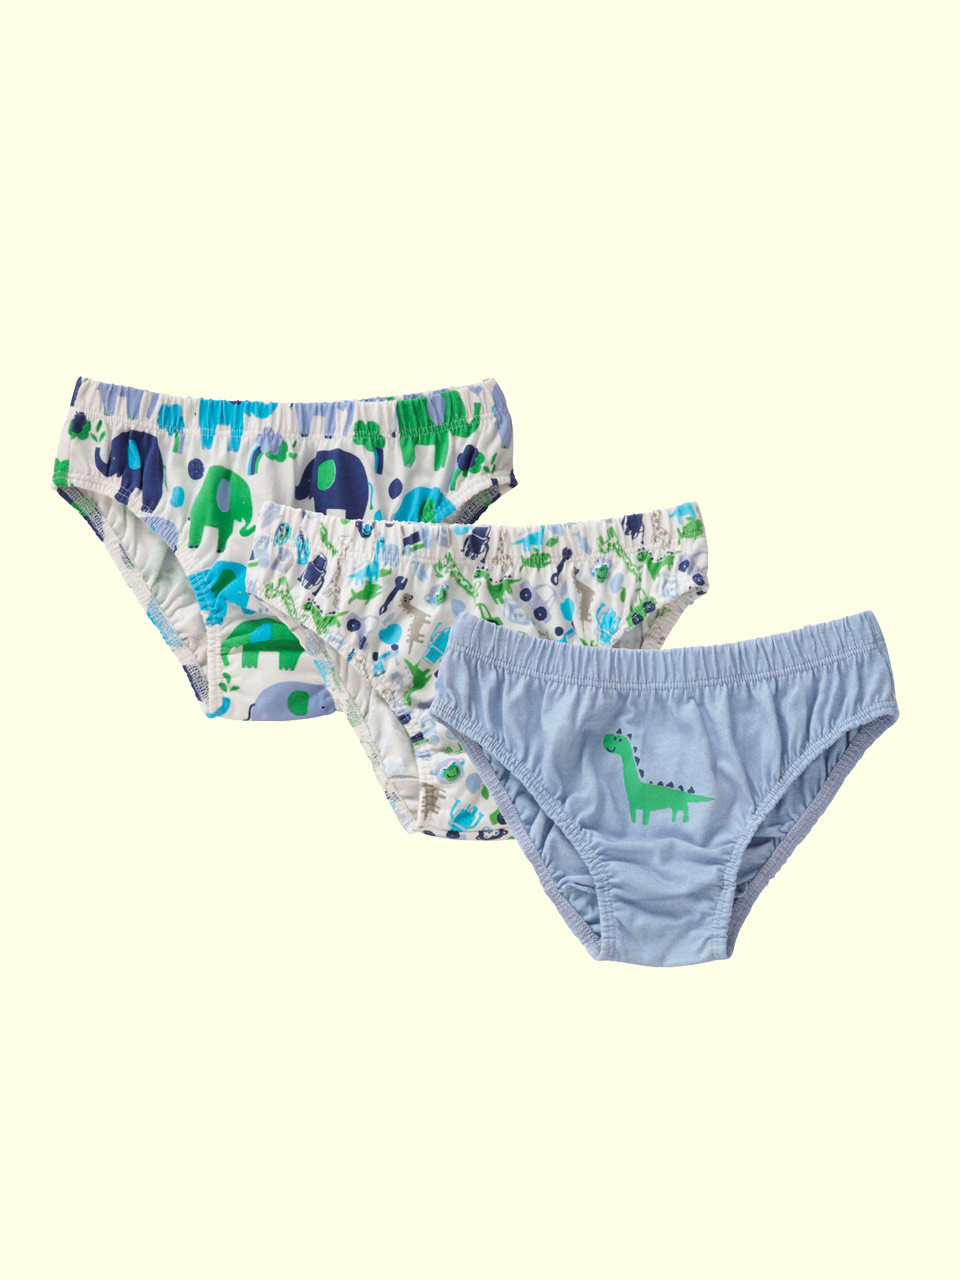 3-Pack Panties Pack Kids Girls Boys Soft 100% Cotton Underwear